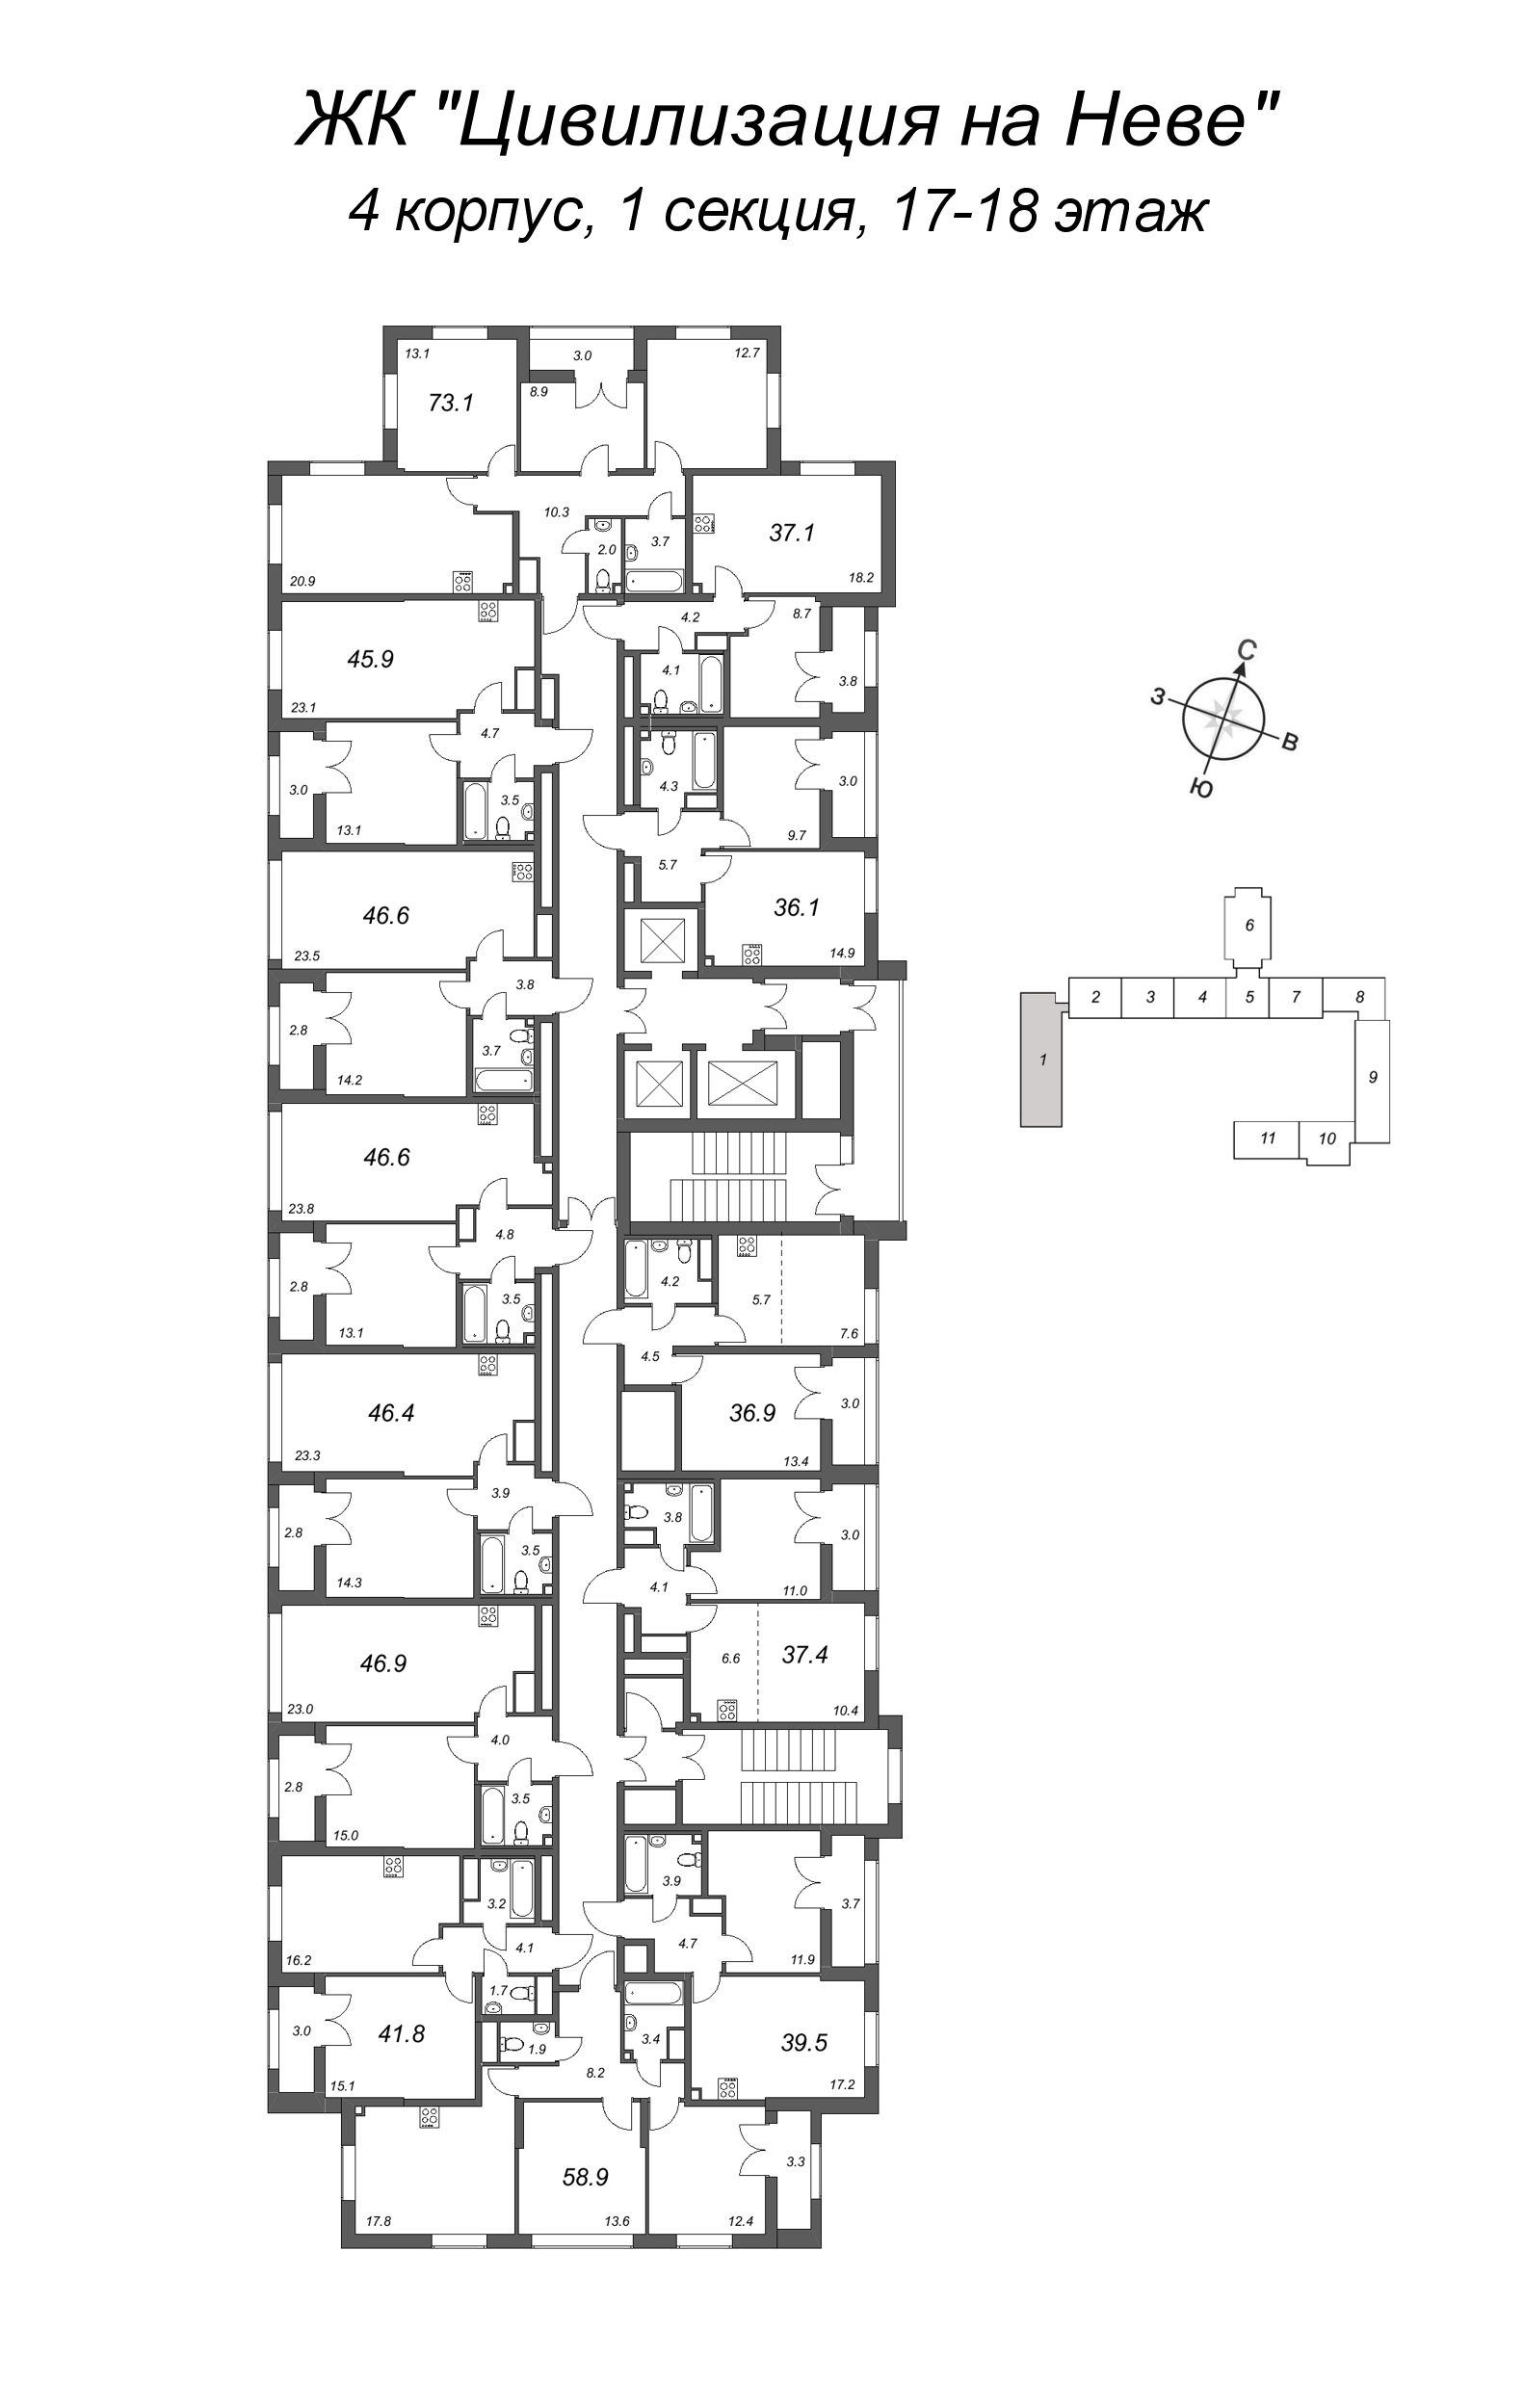 2-комнатная (Евро) квартира, 41.8 м² - планировка этажа